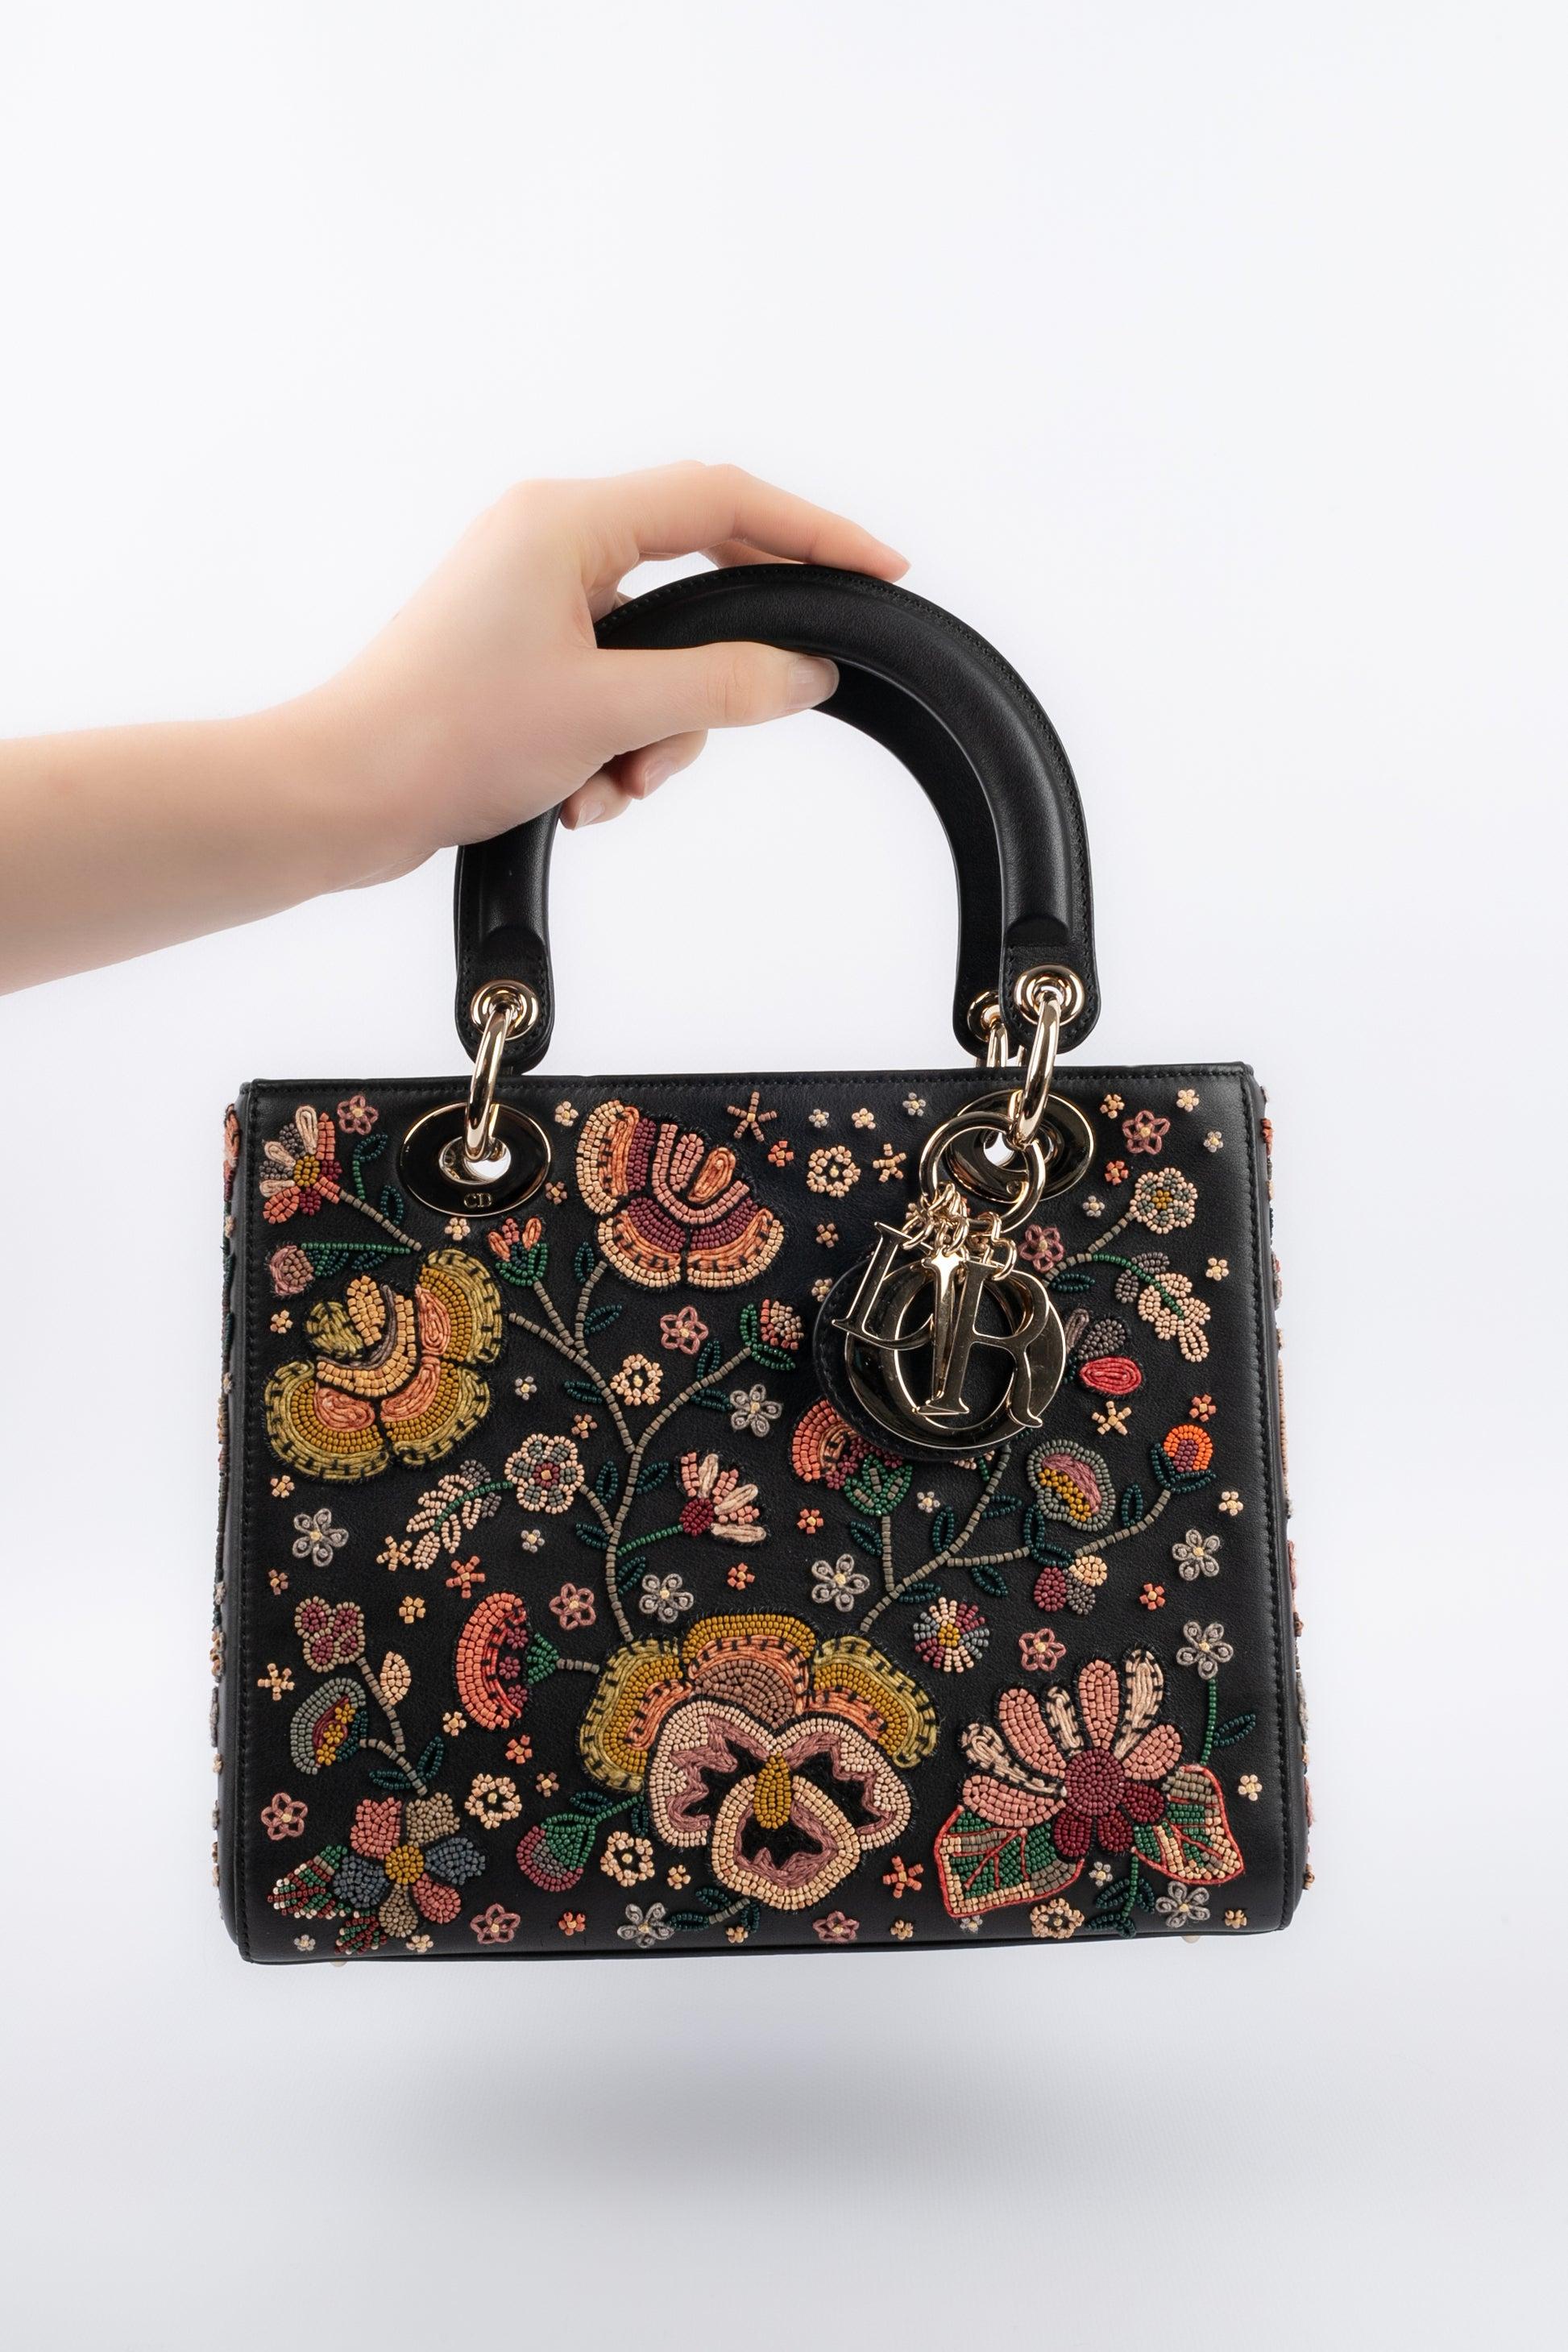 Lady Dior Black Leather Bag, 2019 For Sale 5